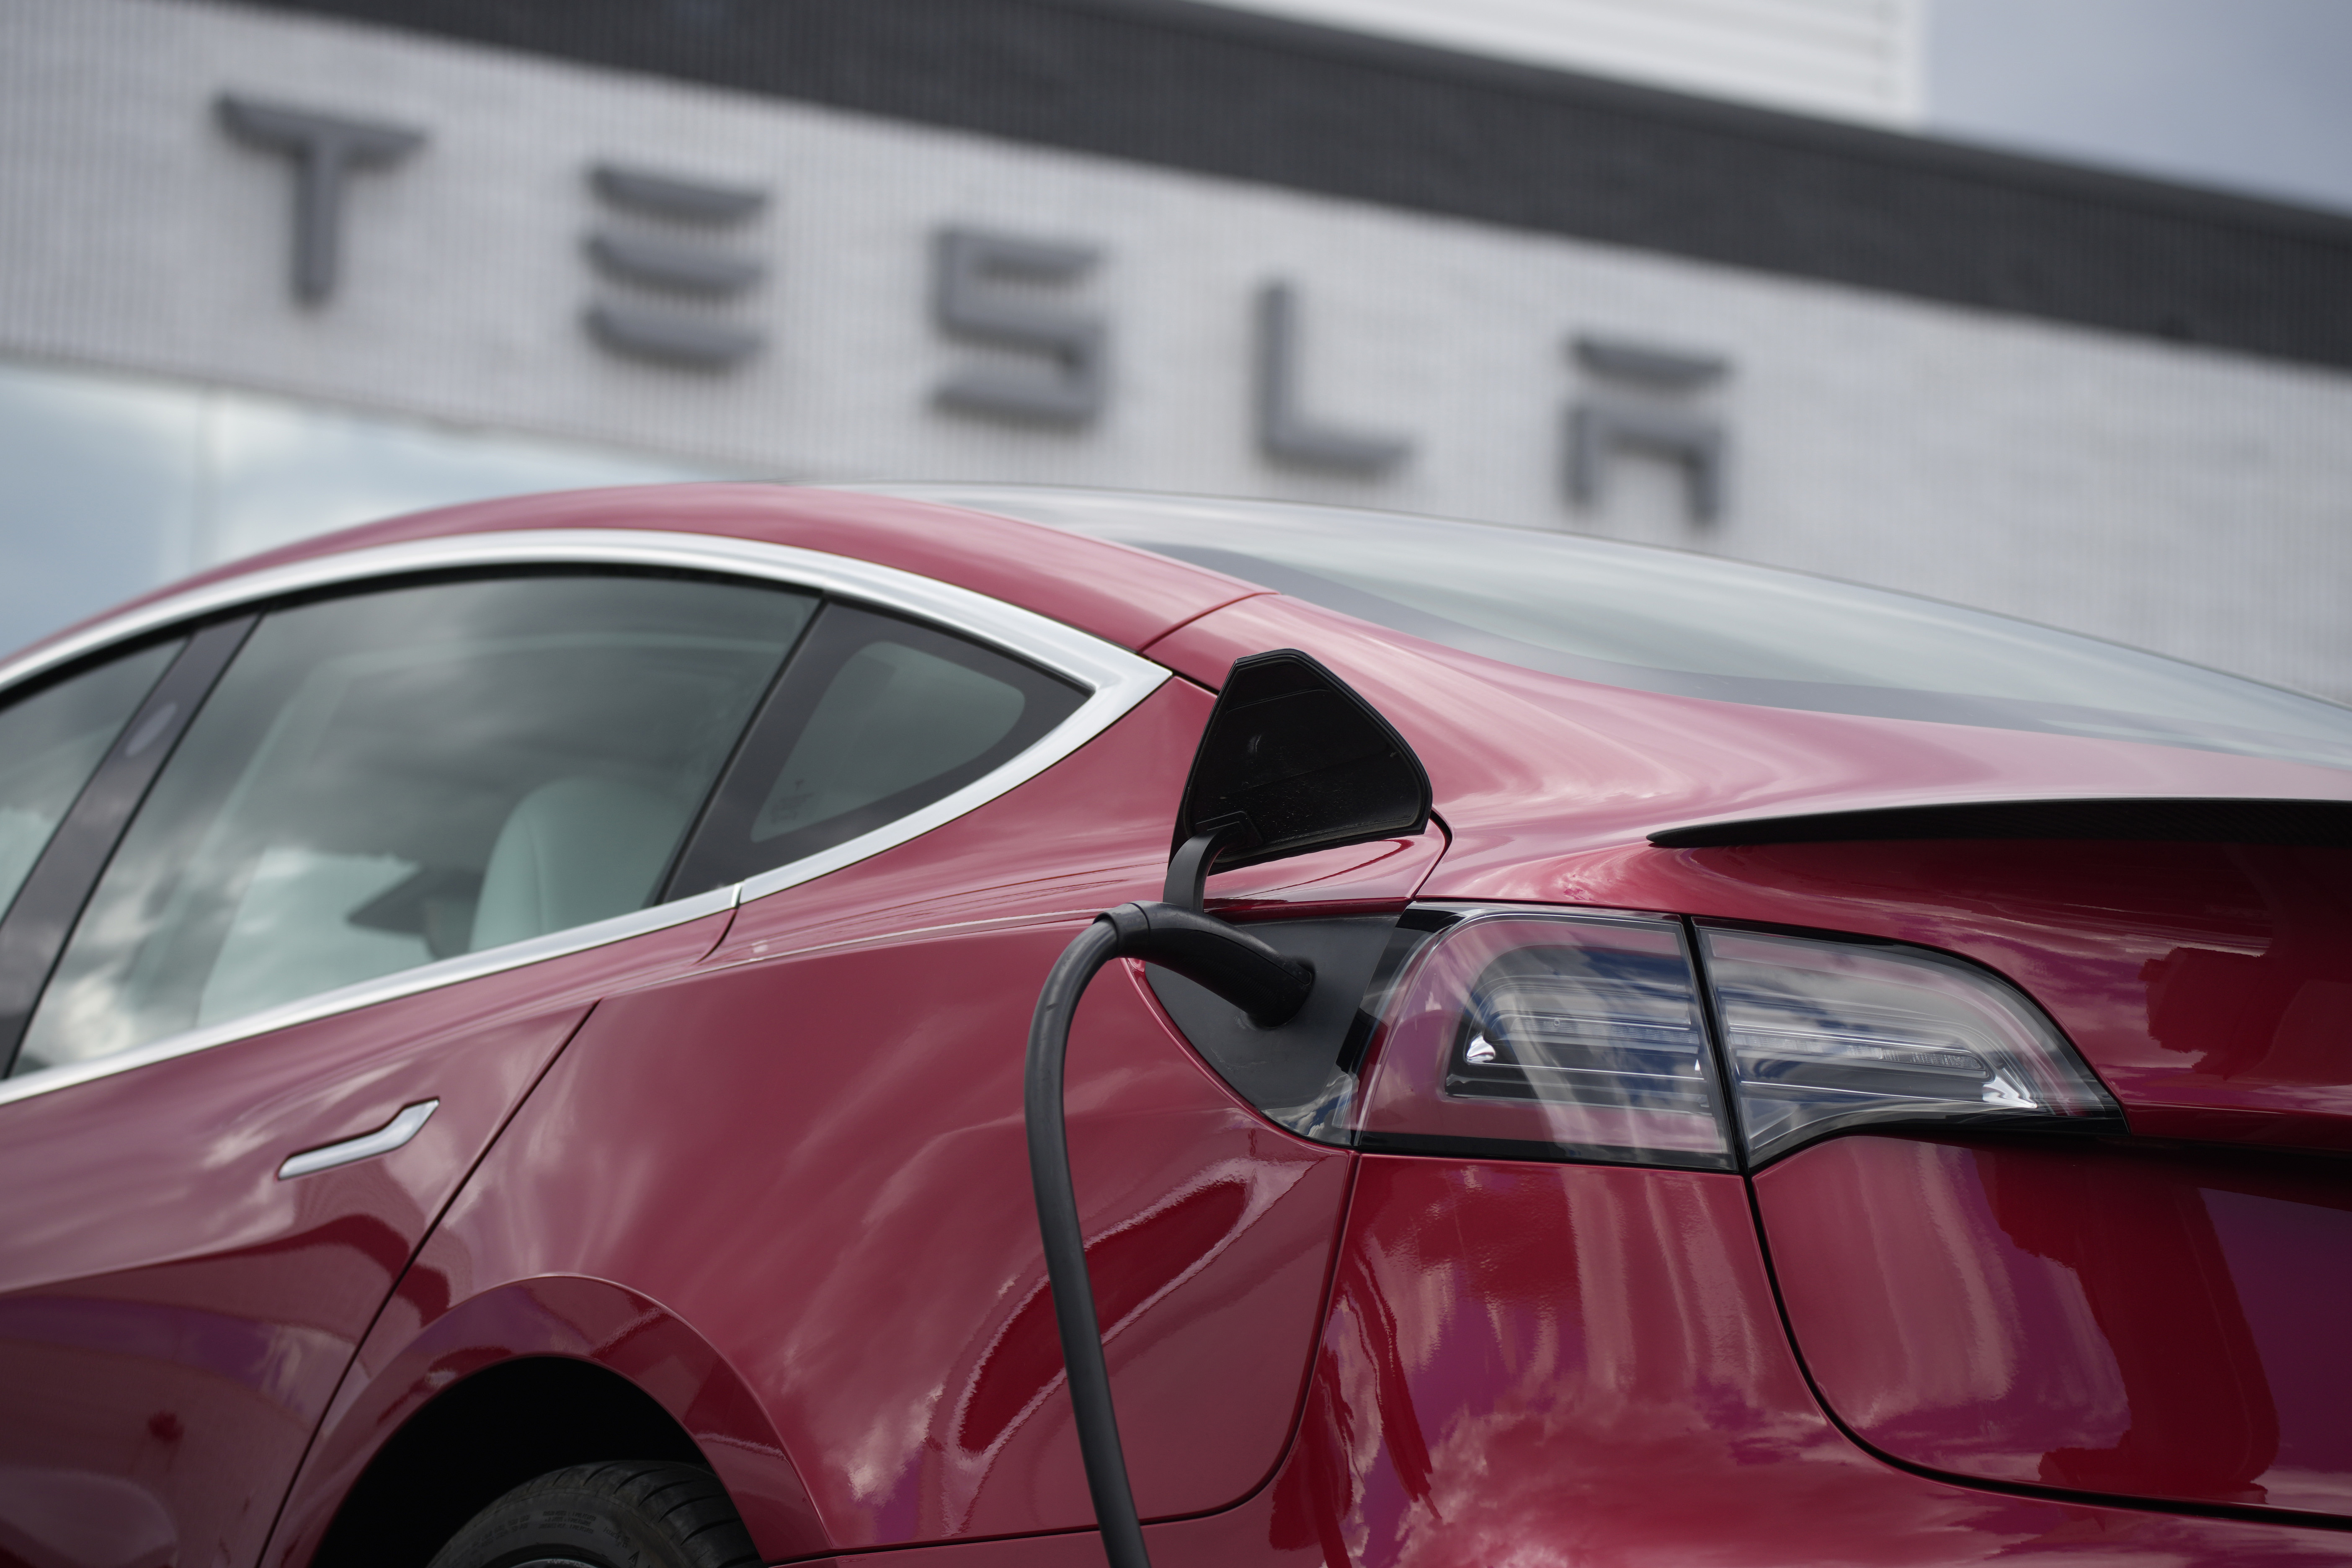 Tesla's recall of 2 million vehicles to fix its Autopilot system